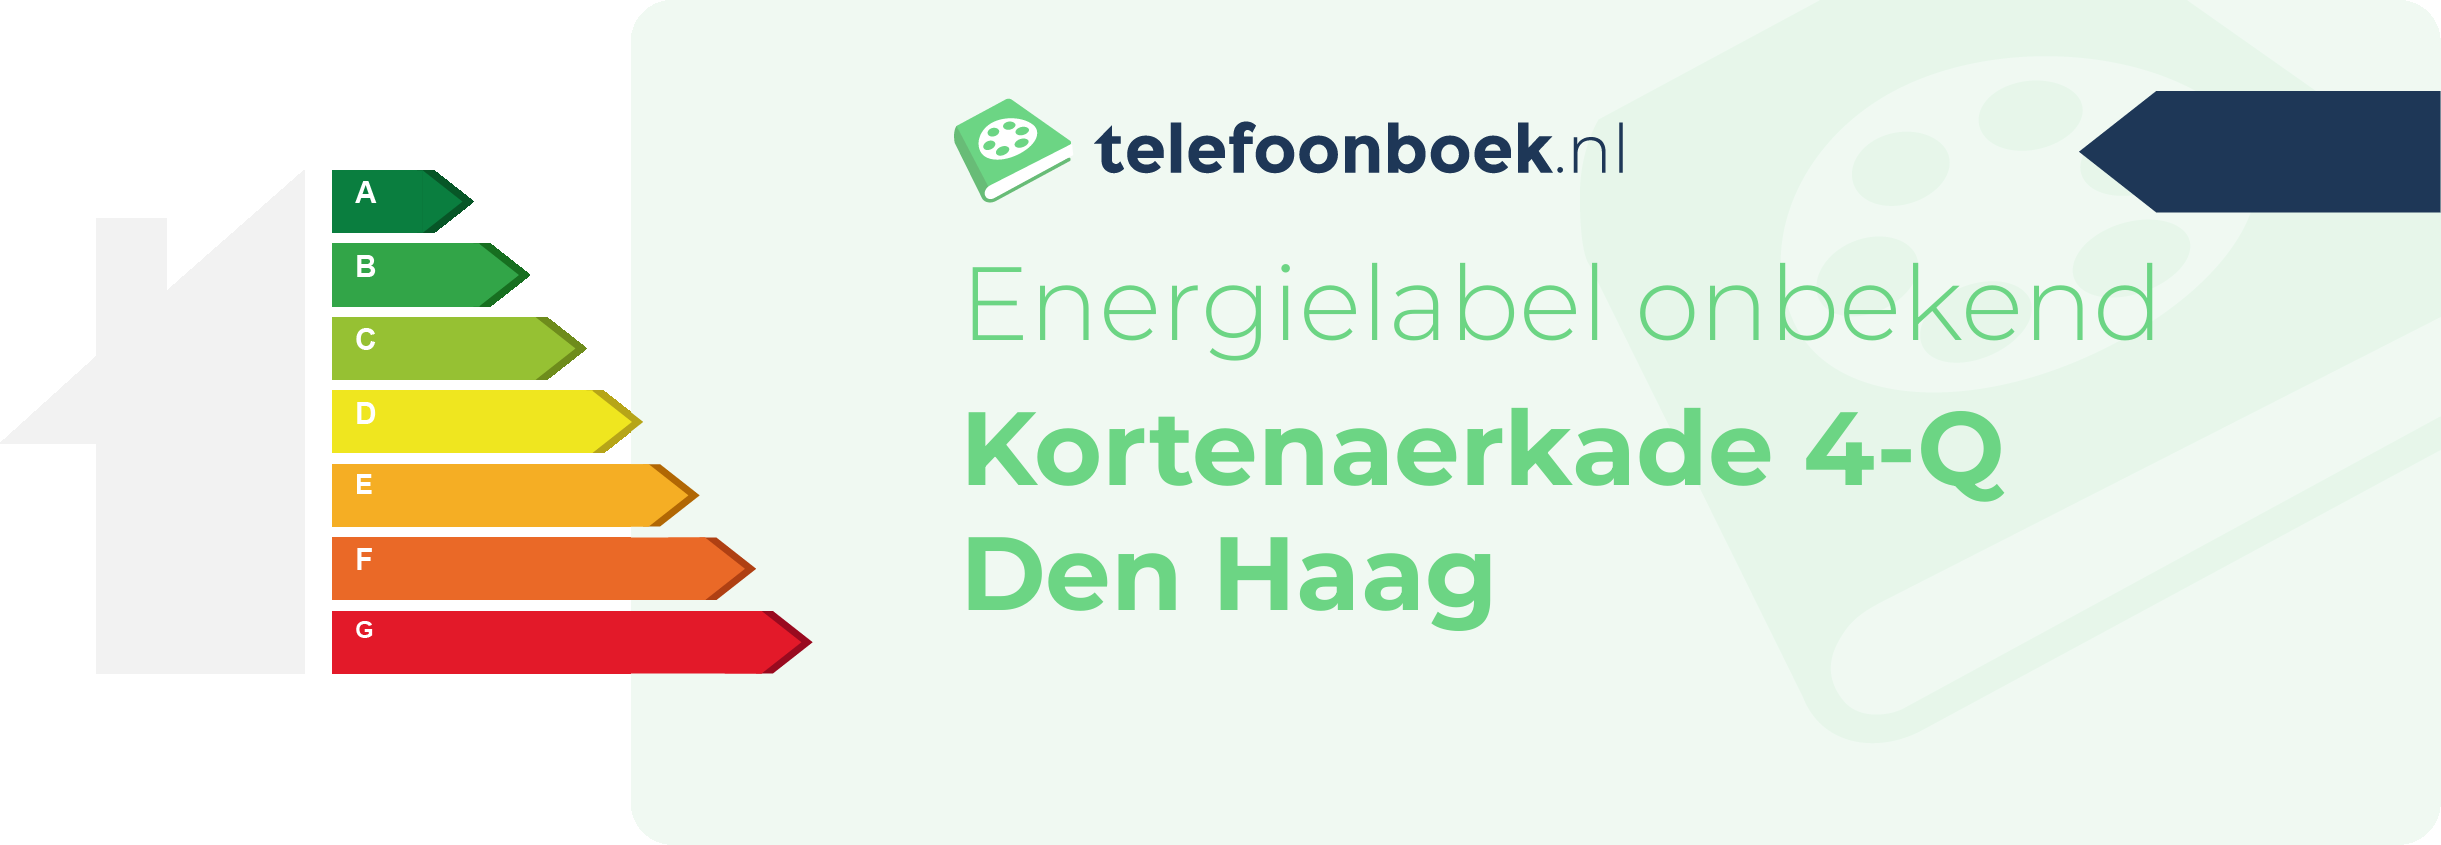 Energielabel Kortenaerkade 4-Q Den Haag